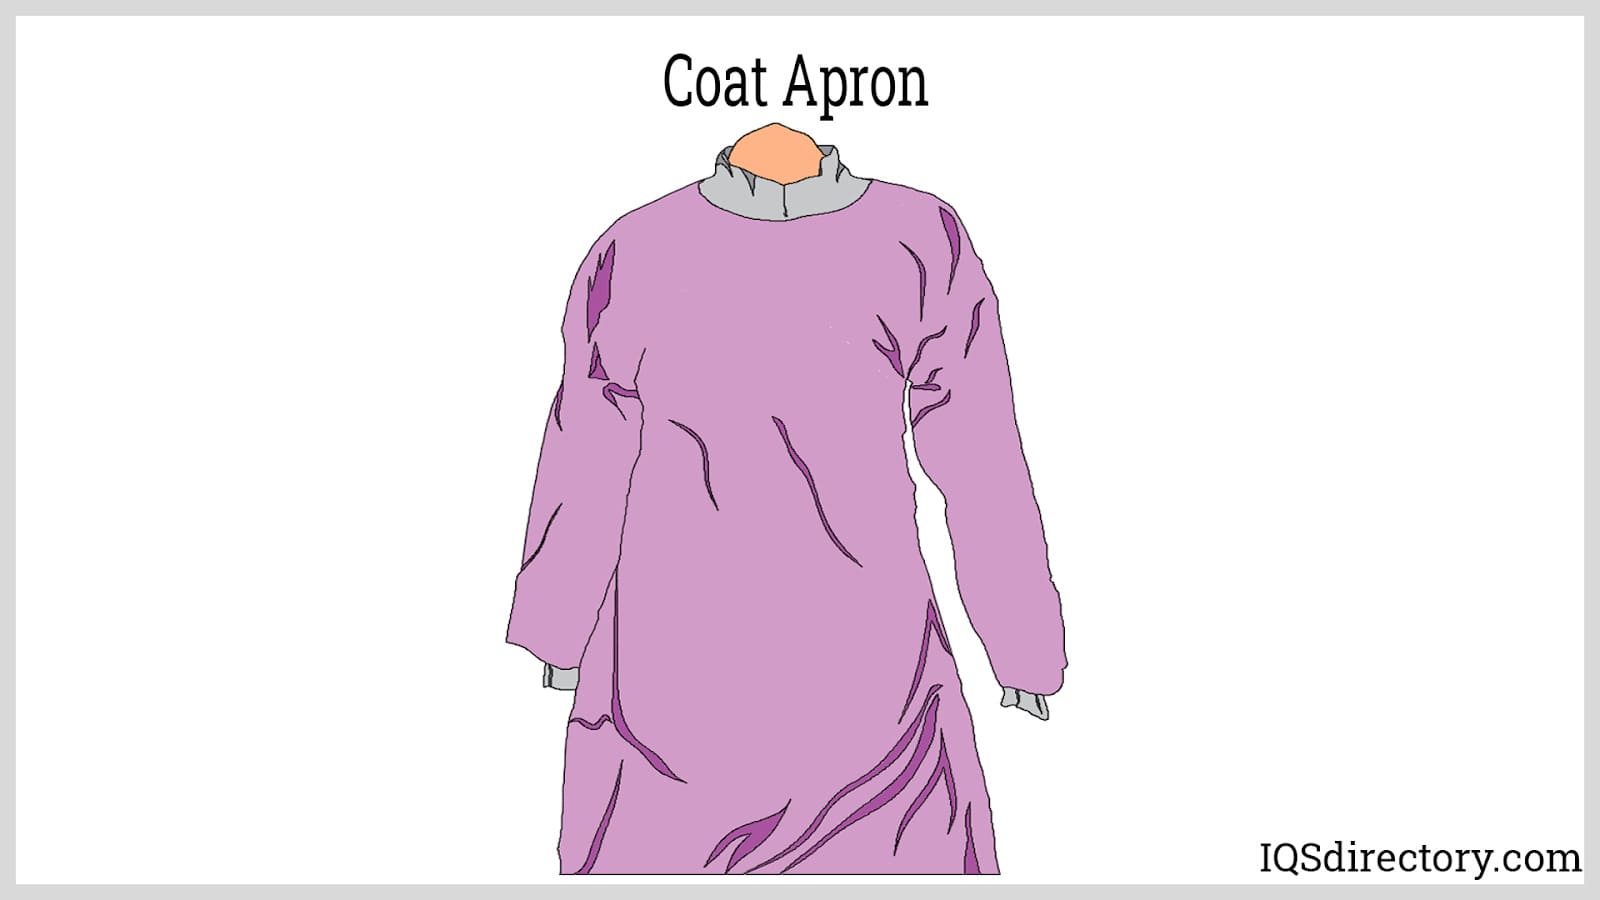 Coat Apron